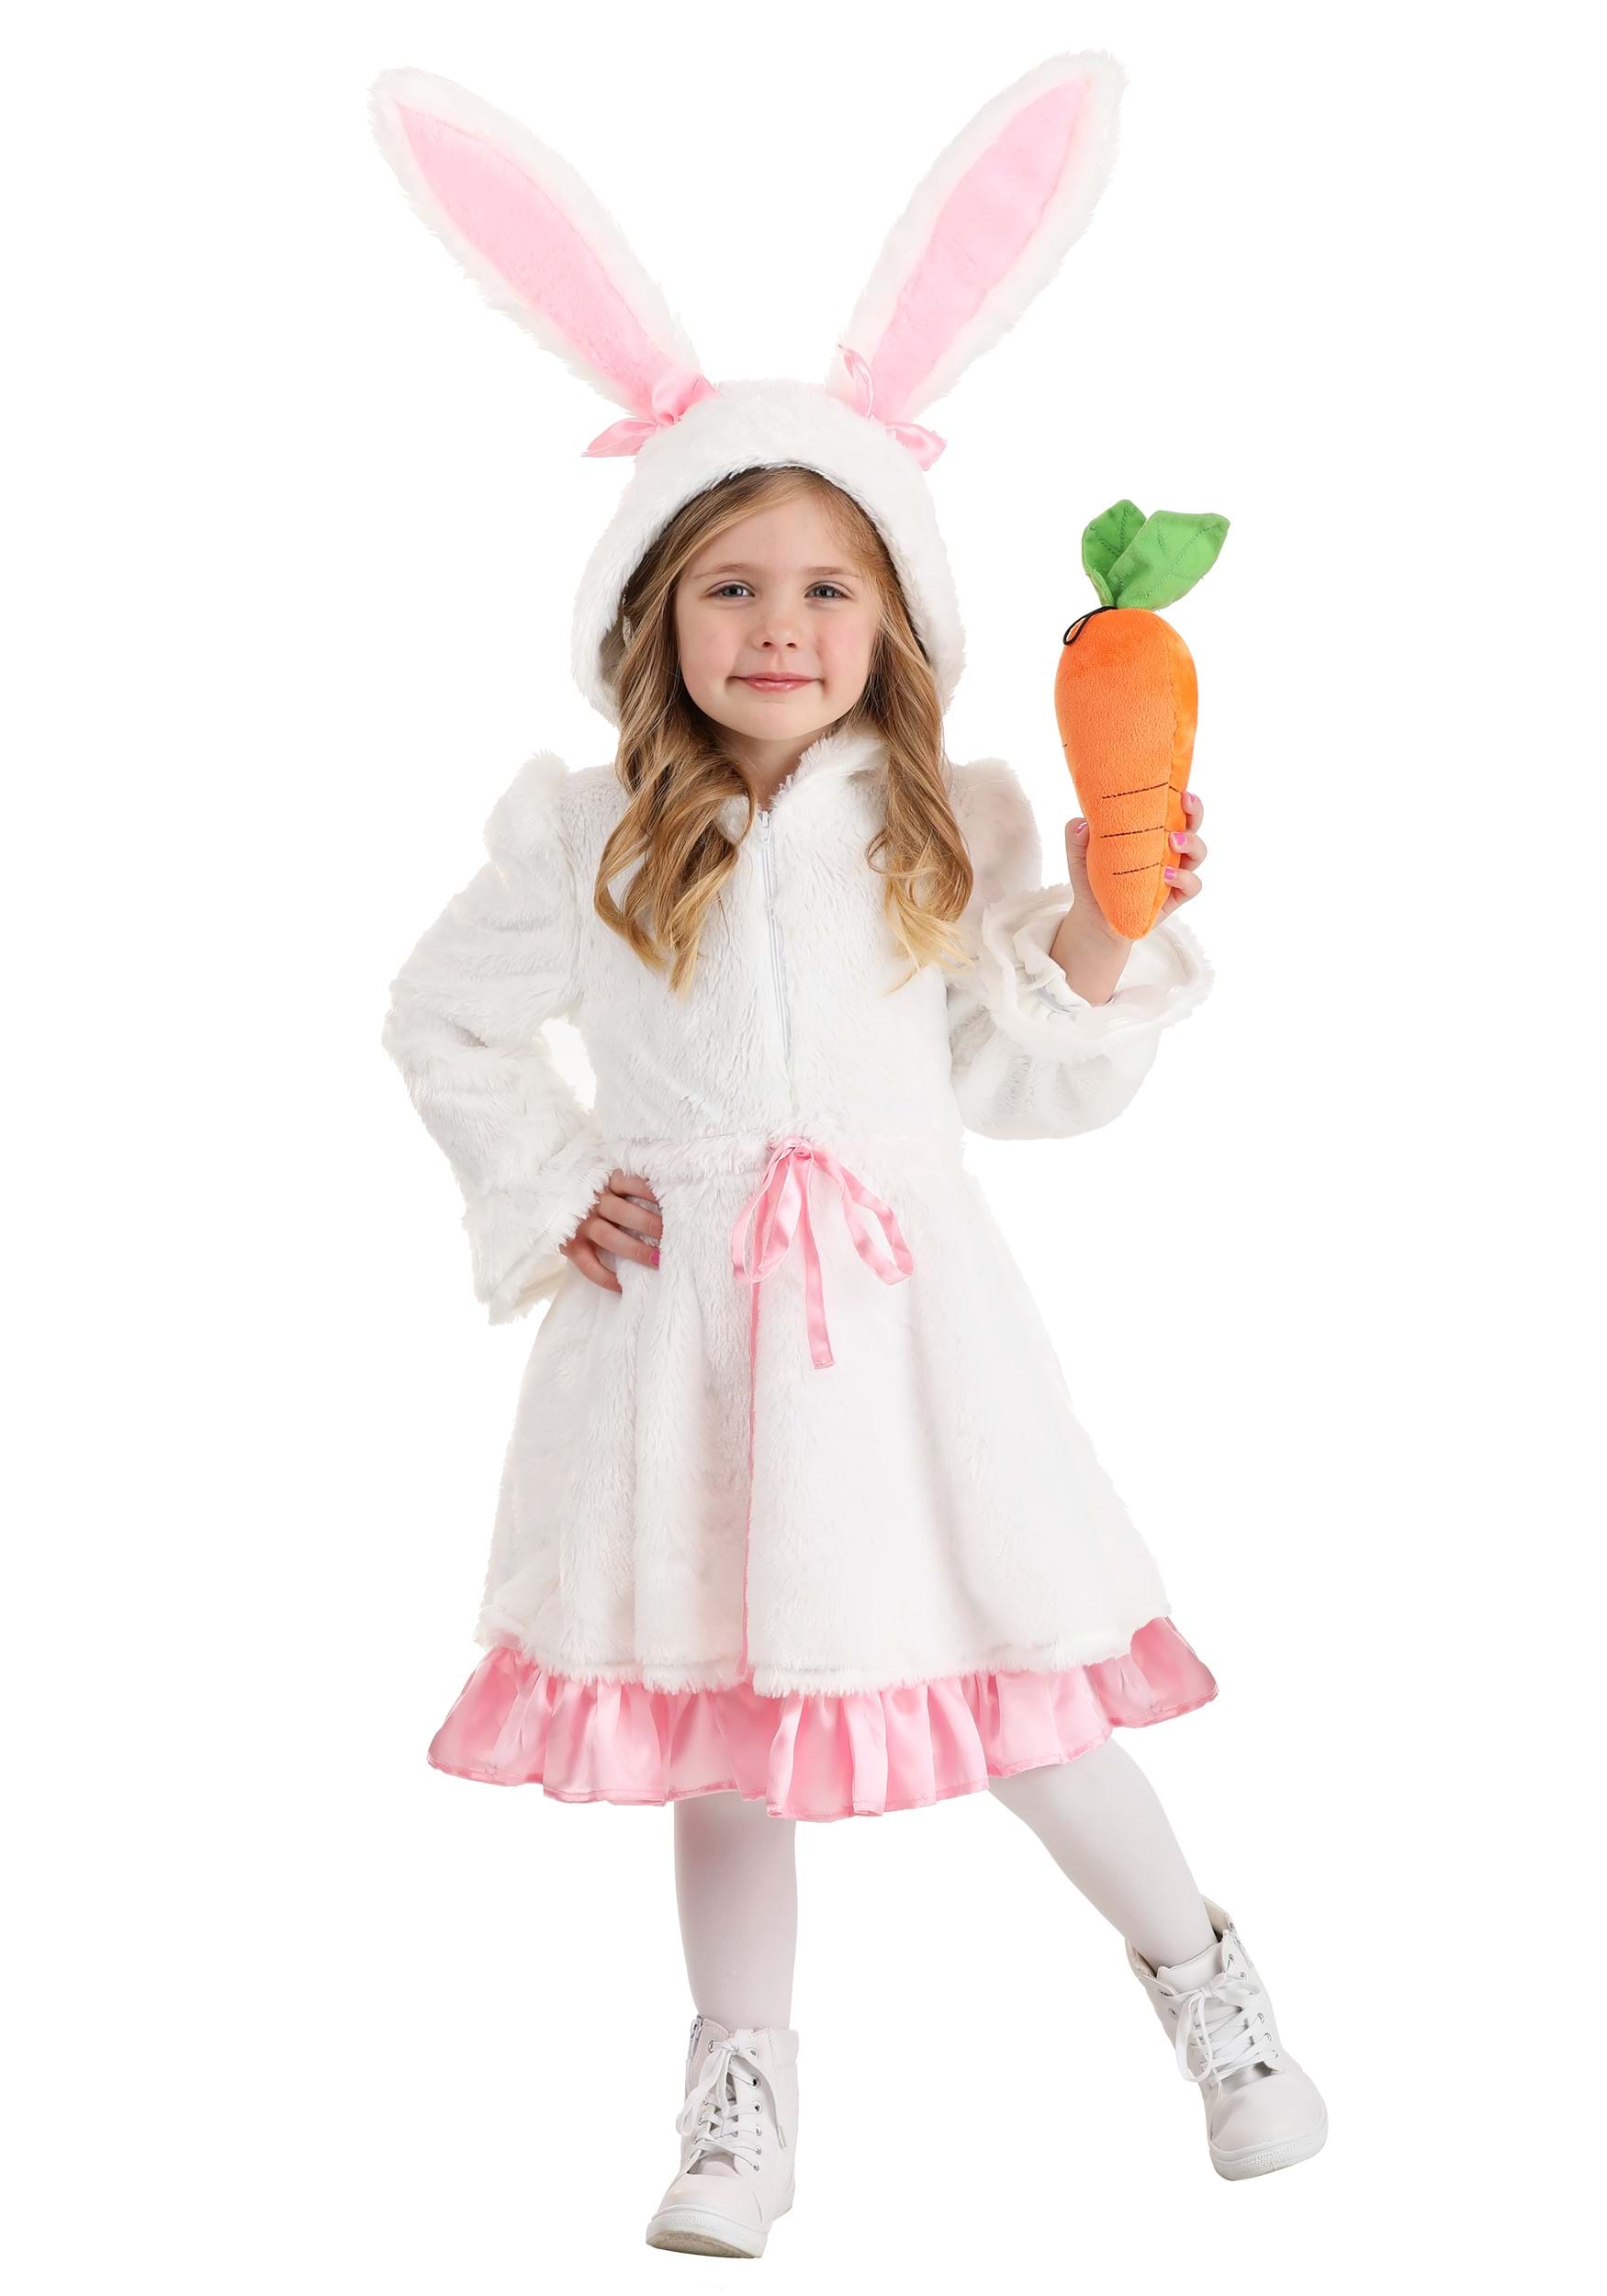 Photos - Fancy Dress Toddler FUN Costumes Girl's  Fuzzy White Rabbit Costume Pink/White FUN1 